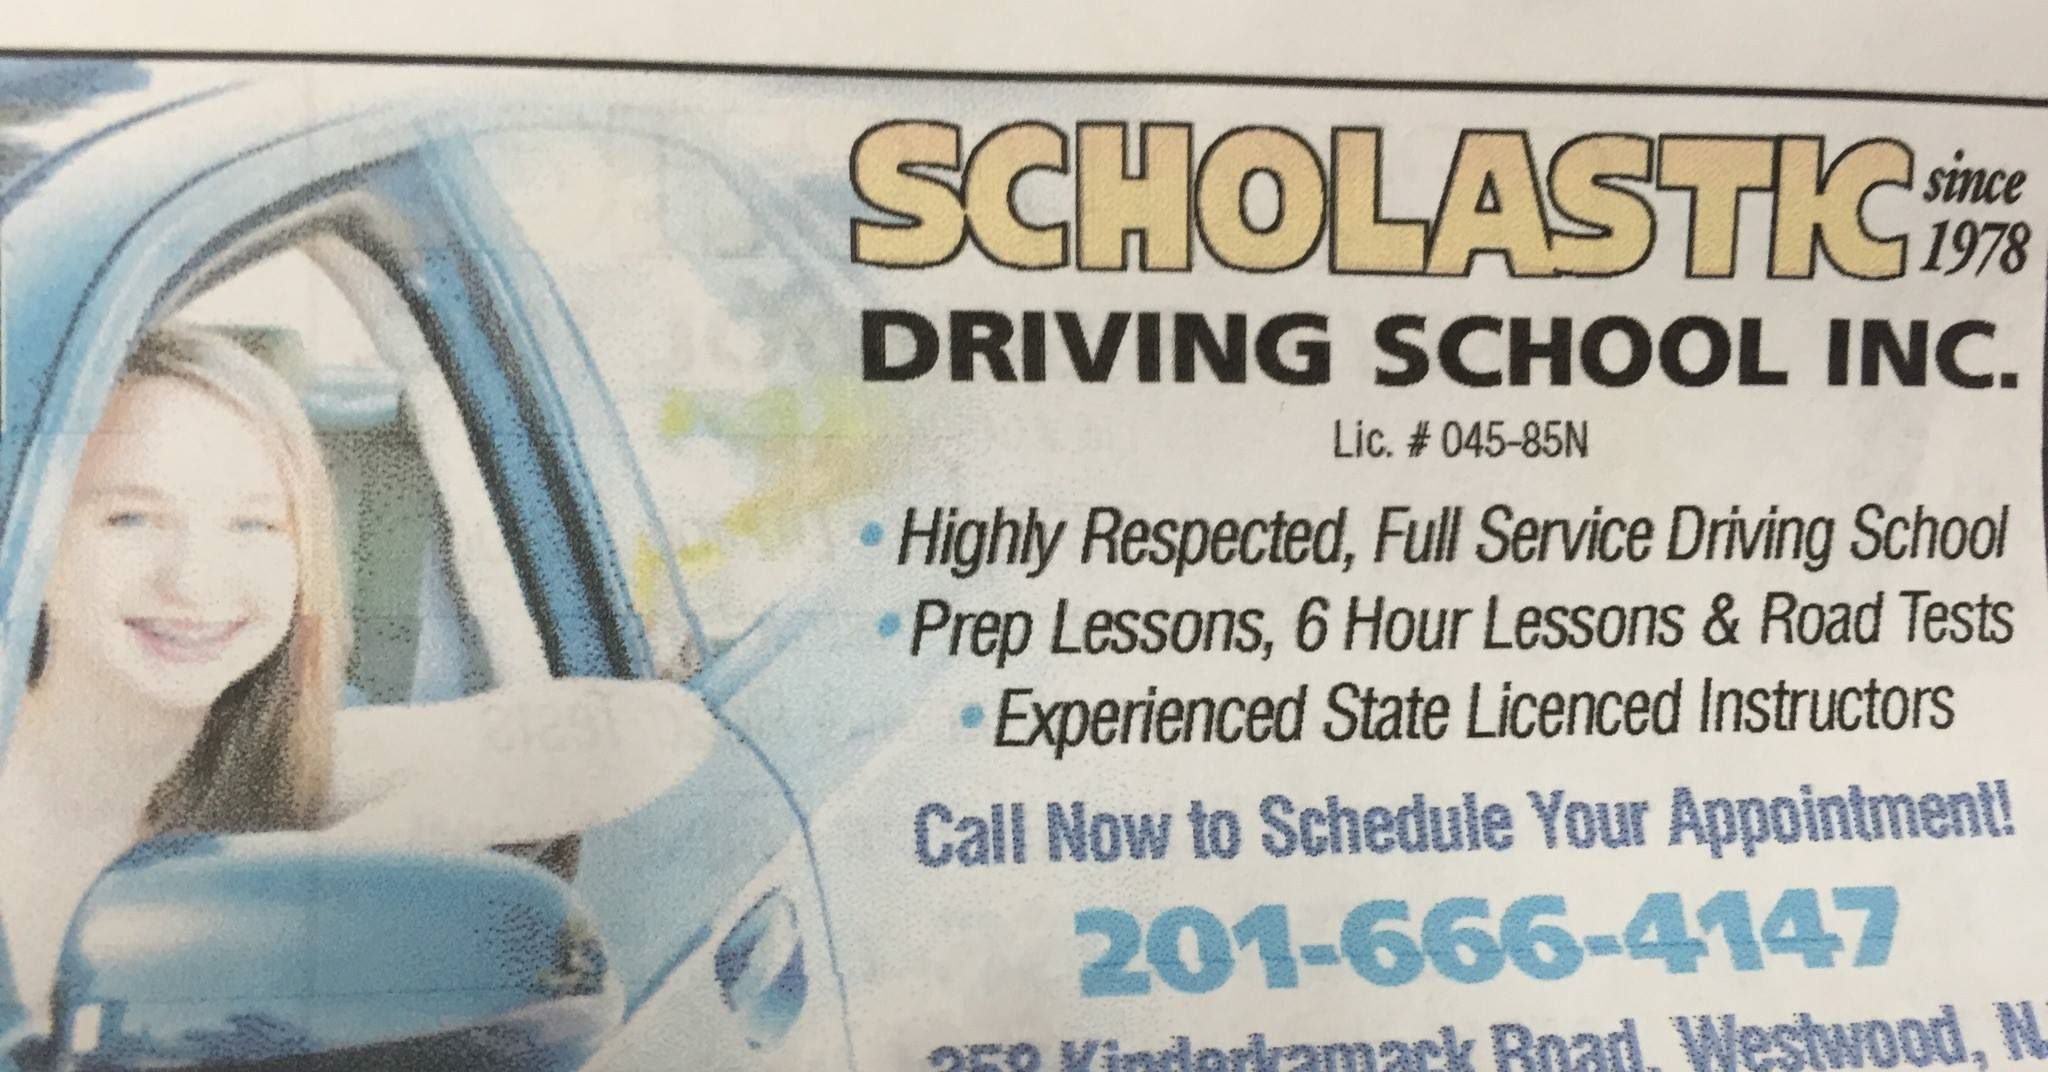 Scholastic Driving School Inc 12 Lincoln Blvd, Emerson New Jersey 07630